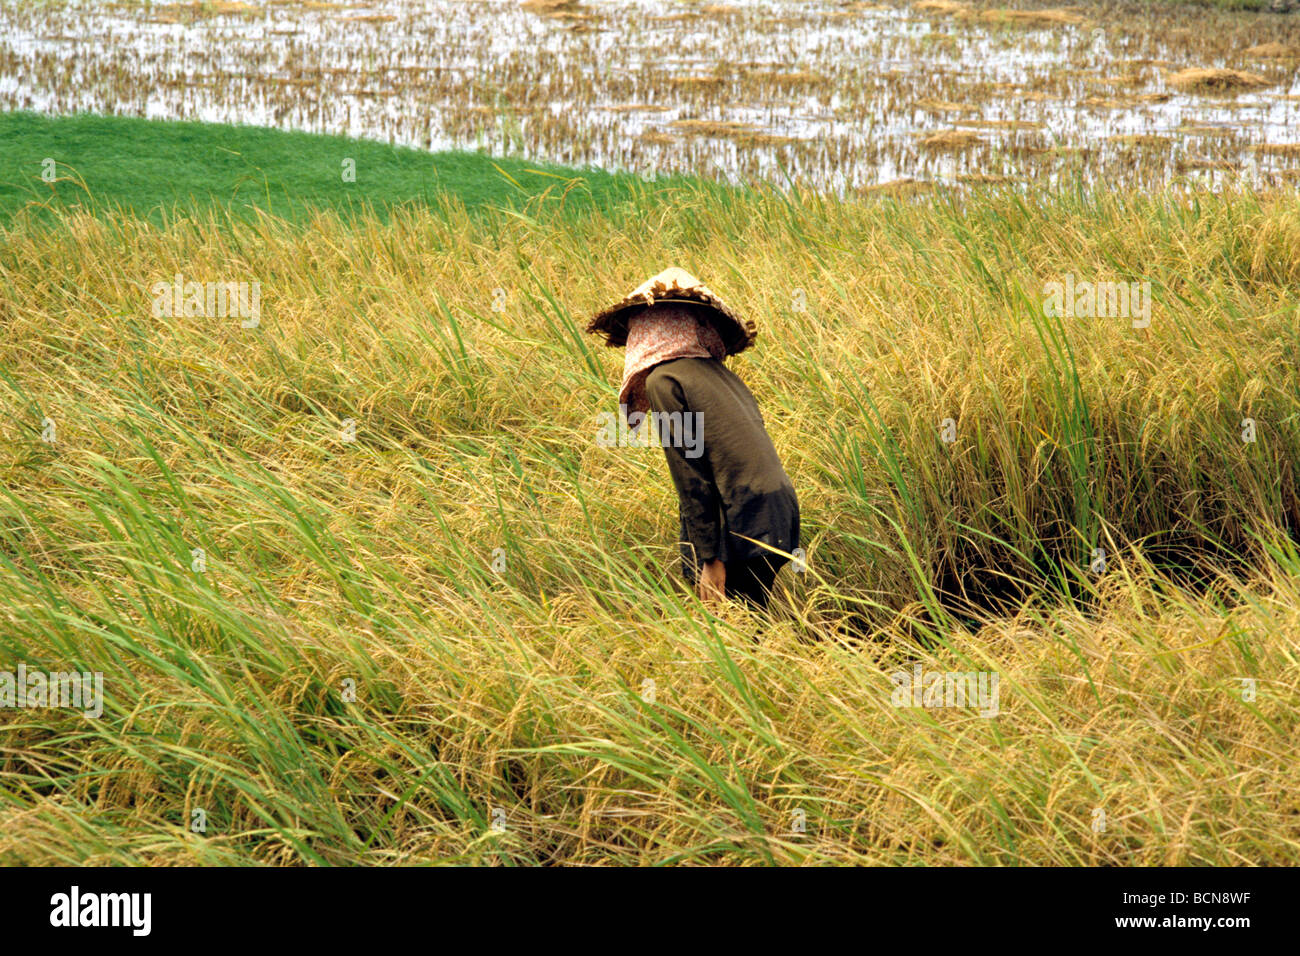 Les champs de riz du Vietnam delta du Mékong Banque D'Images